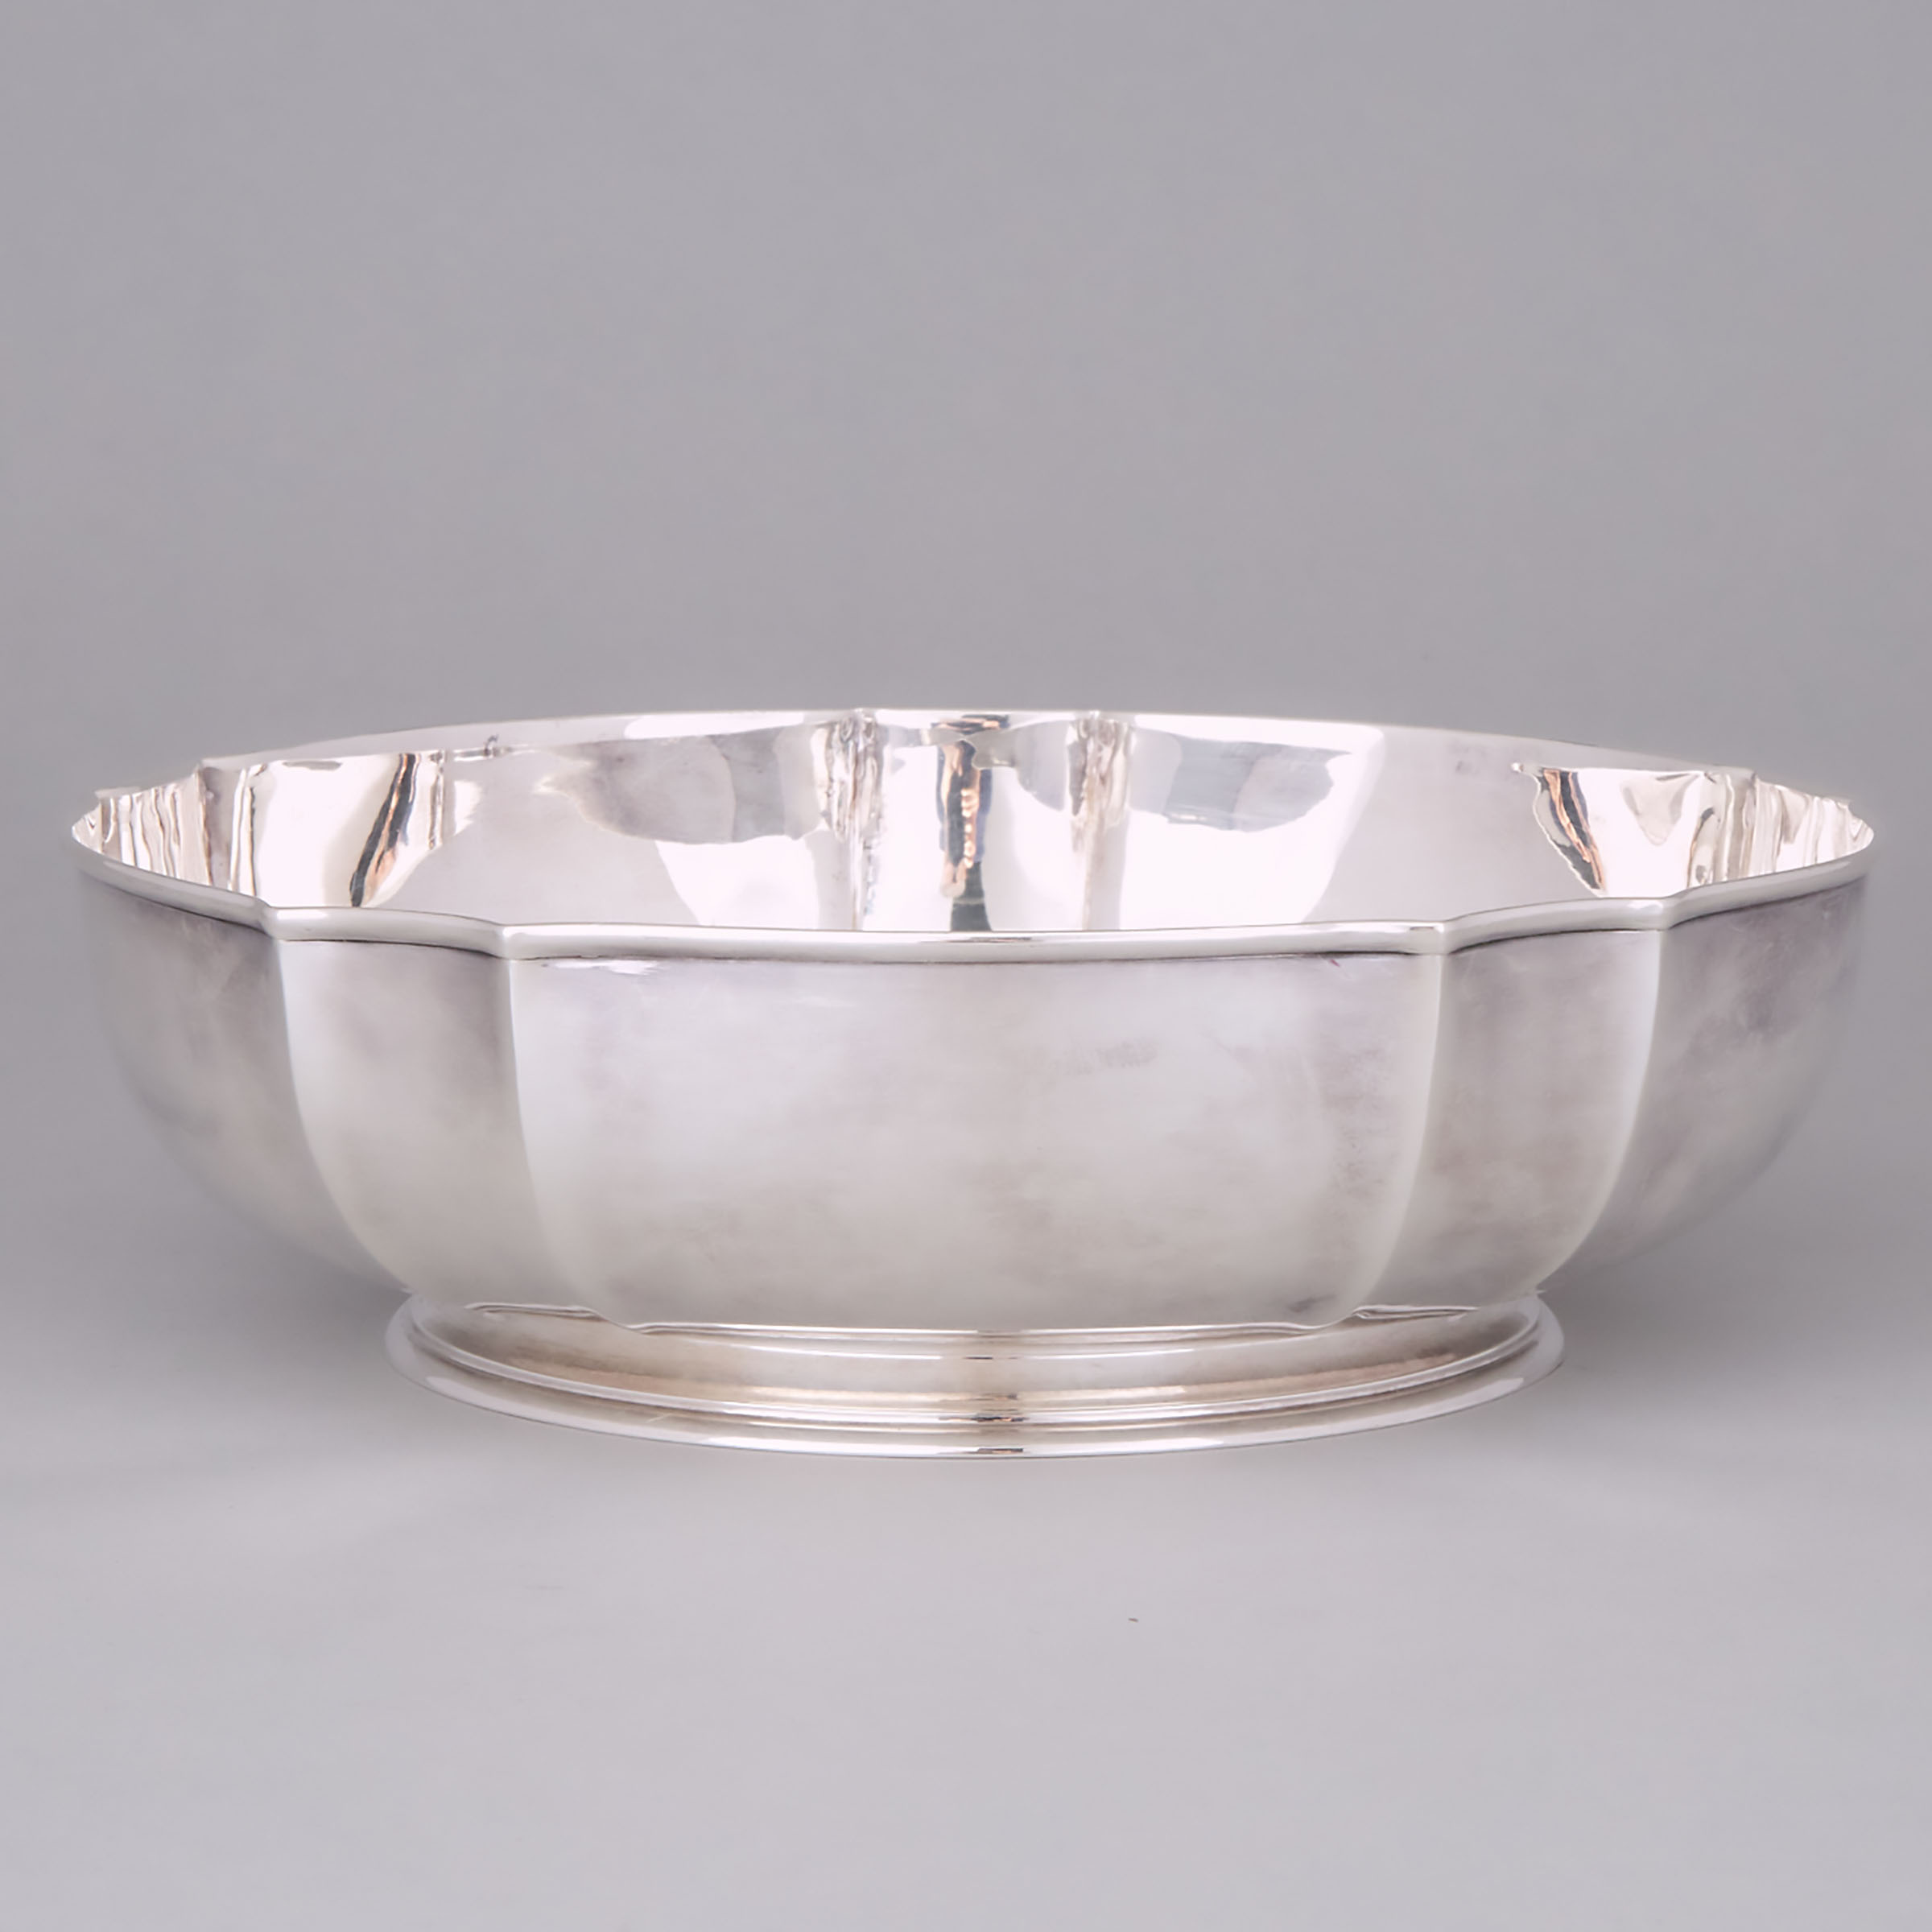 Swiss Silver Shaped Circular Bowl, Jezler, Schaffhausen, 20th century 